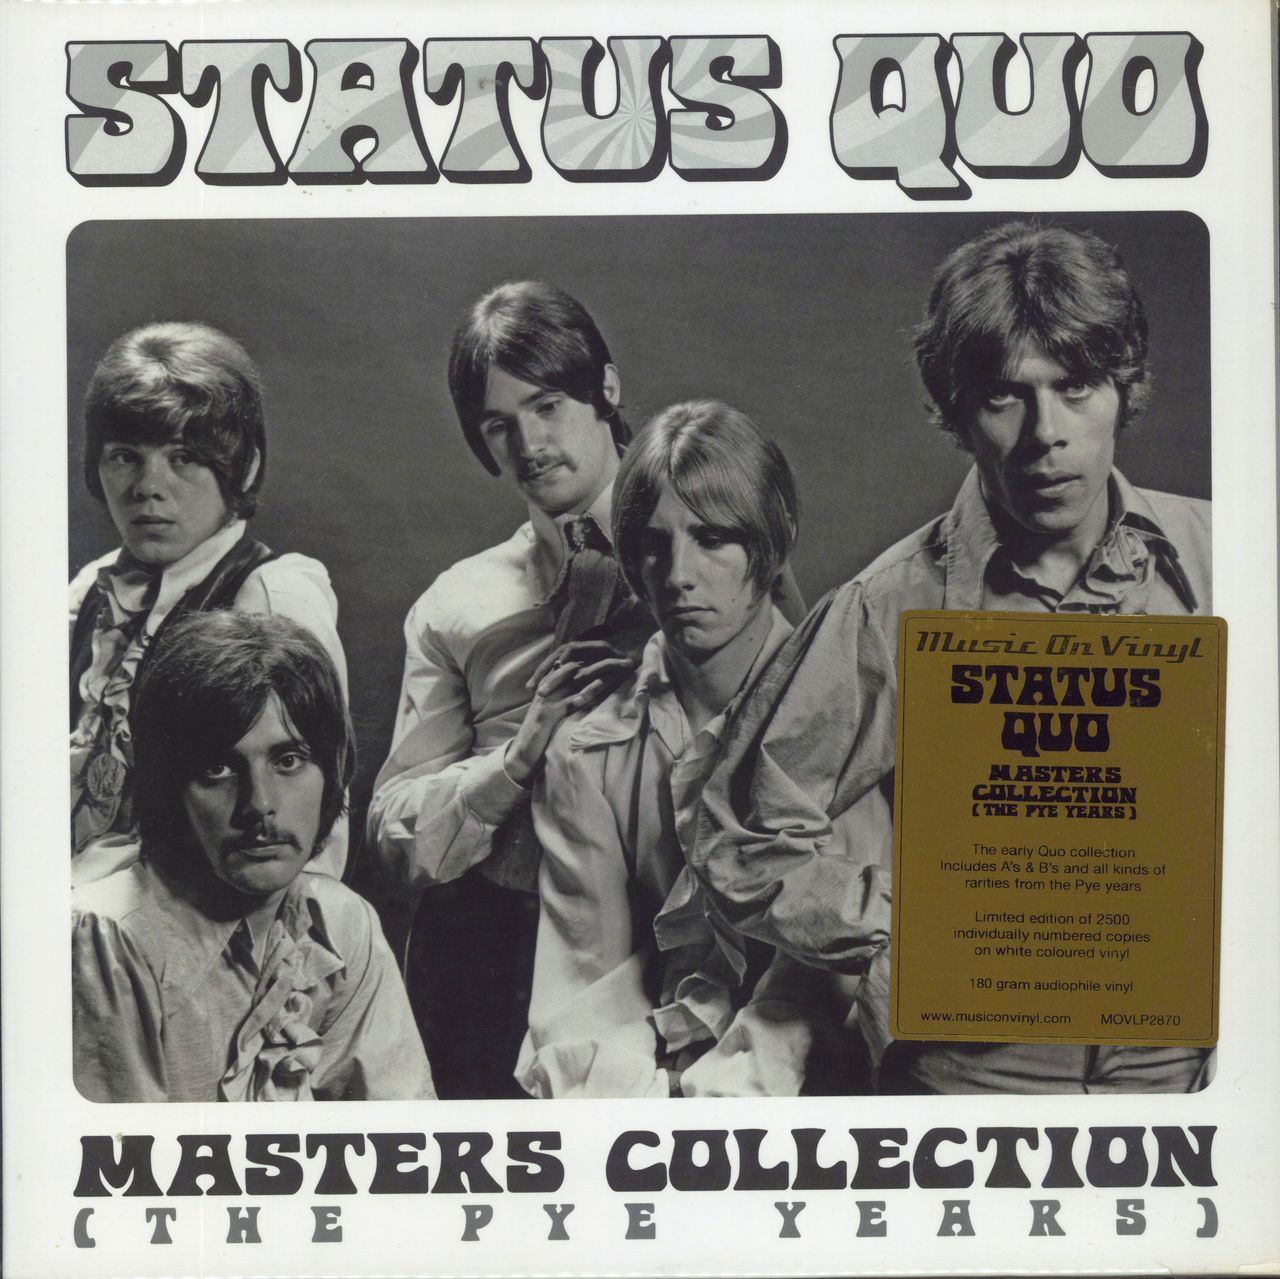 Status Quo Masters Collection Pye Years) UK 2-LP vinyl — RareVinyl.com